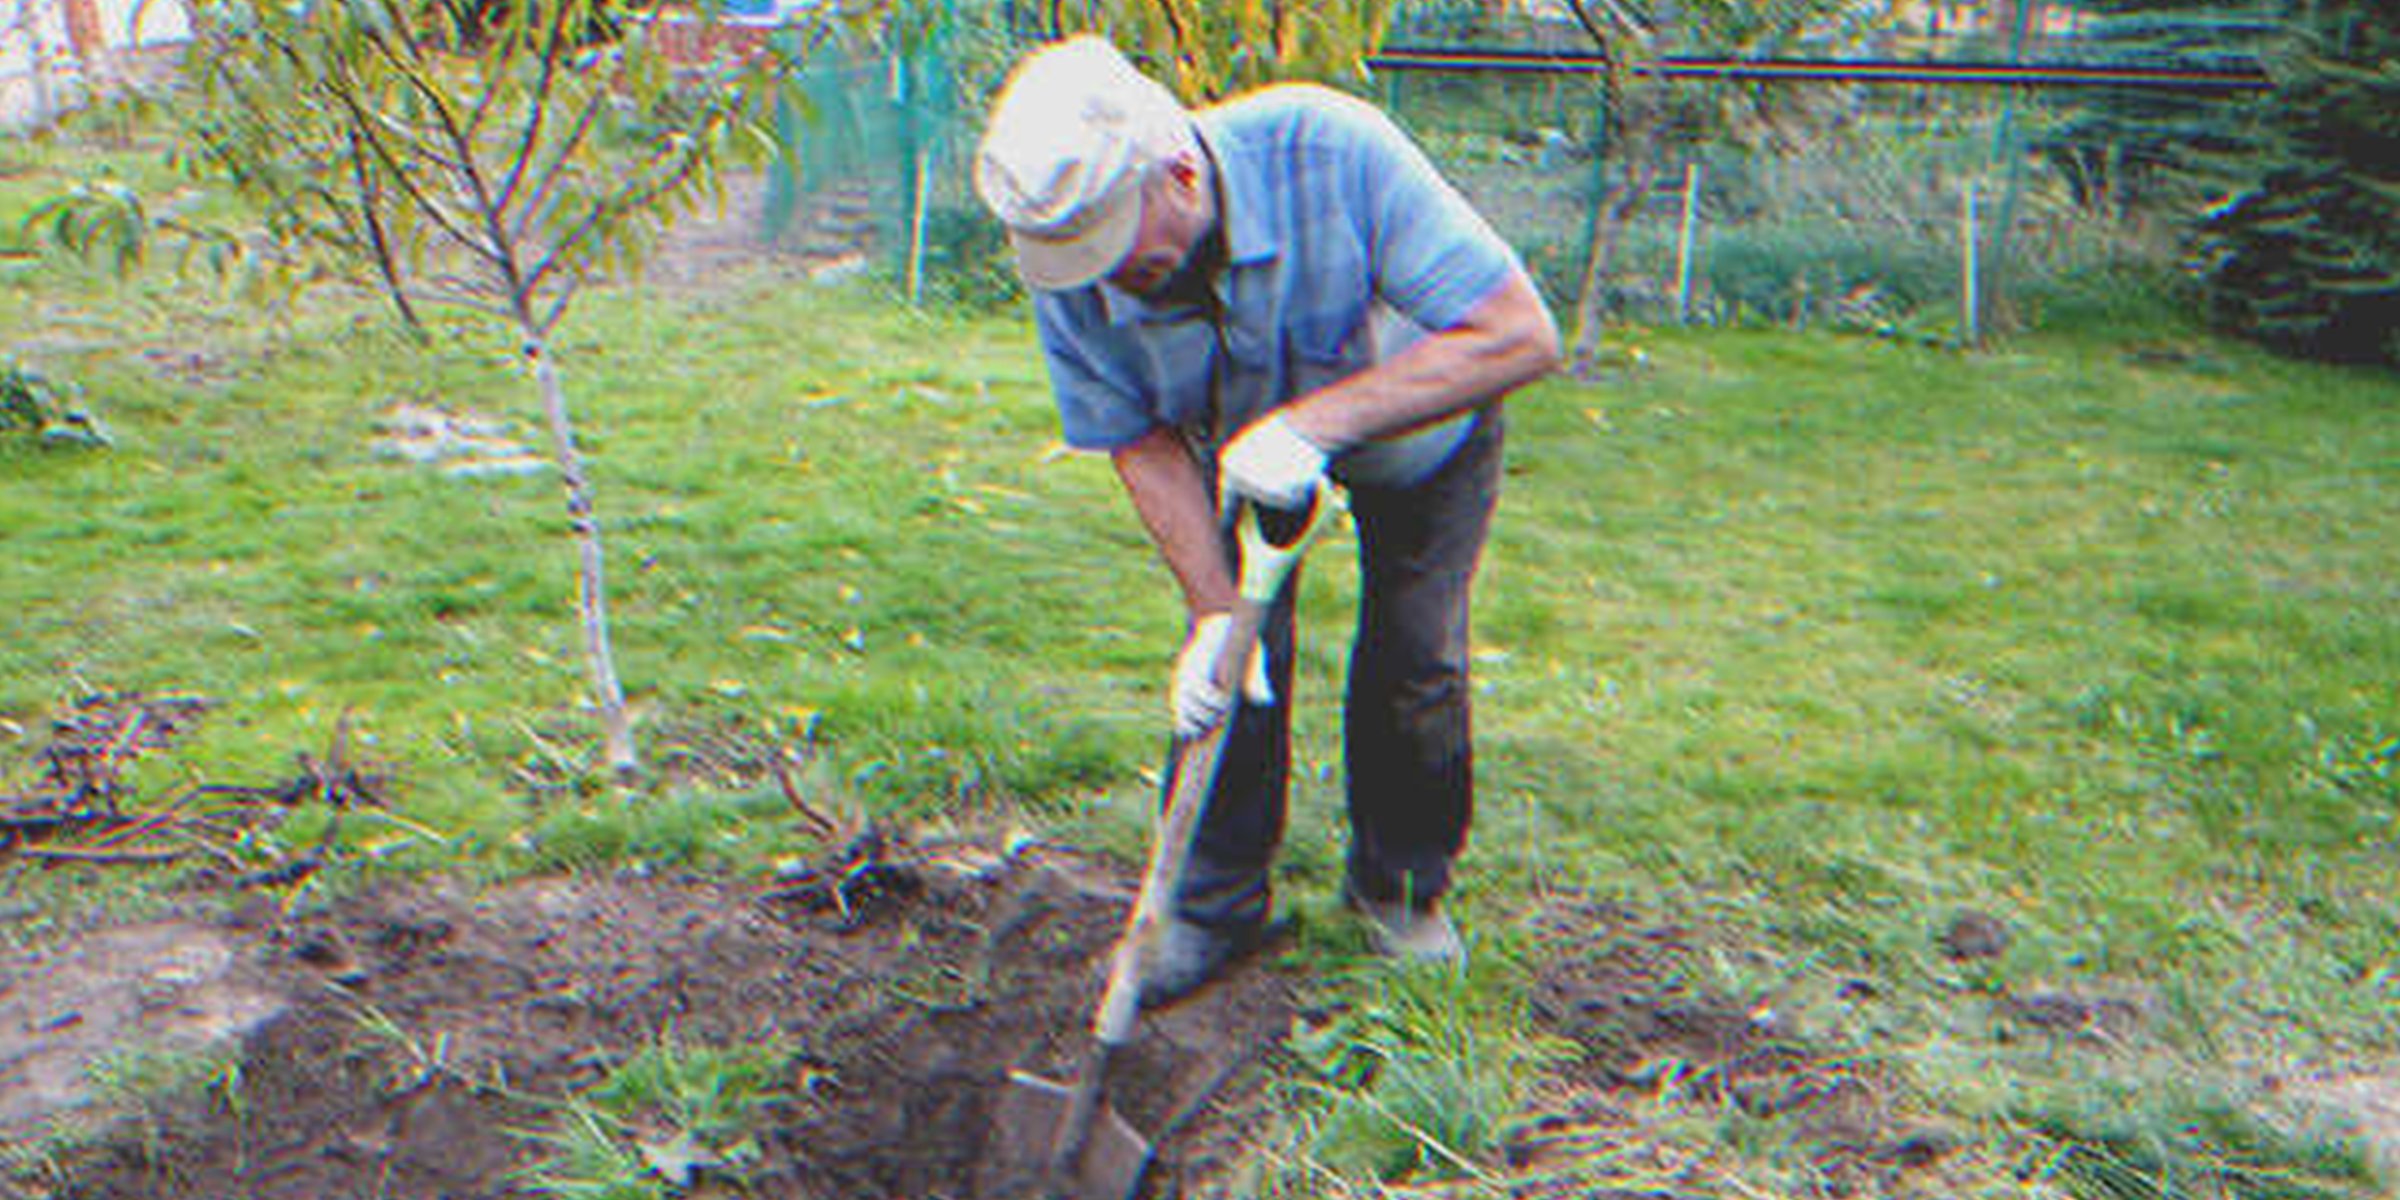 A man digging a hole | Source: Shutterstock